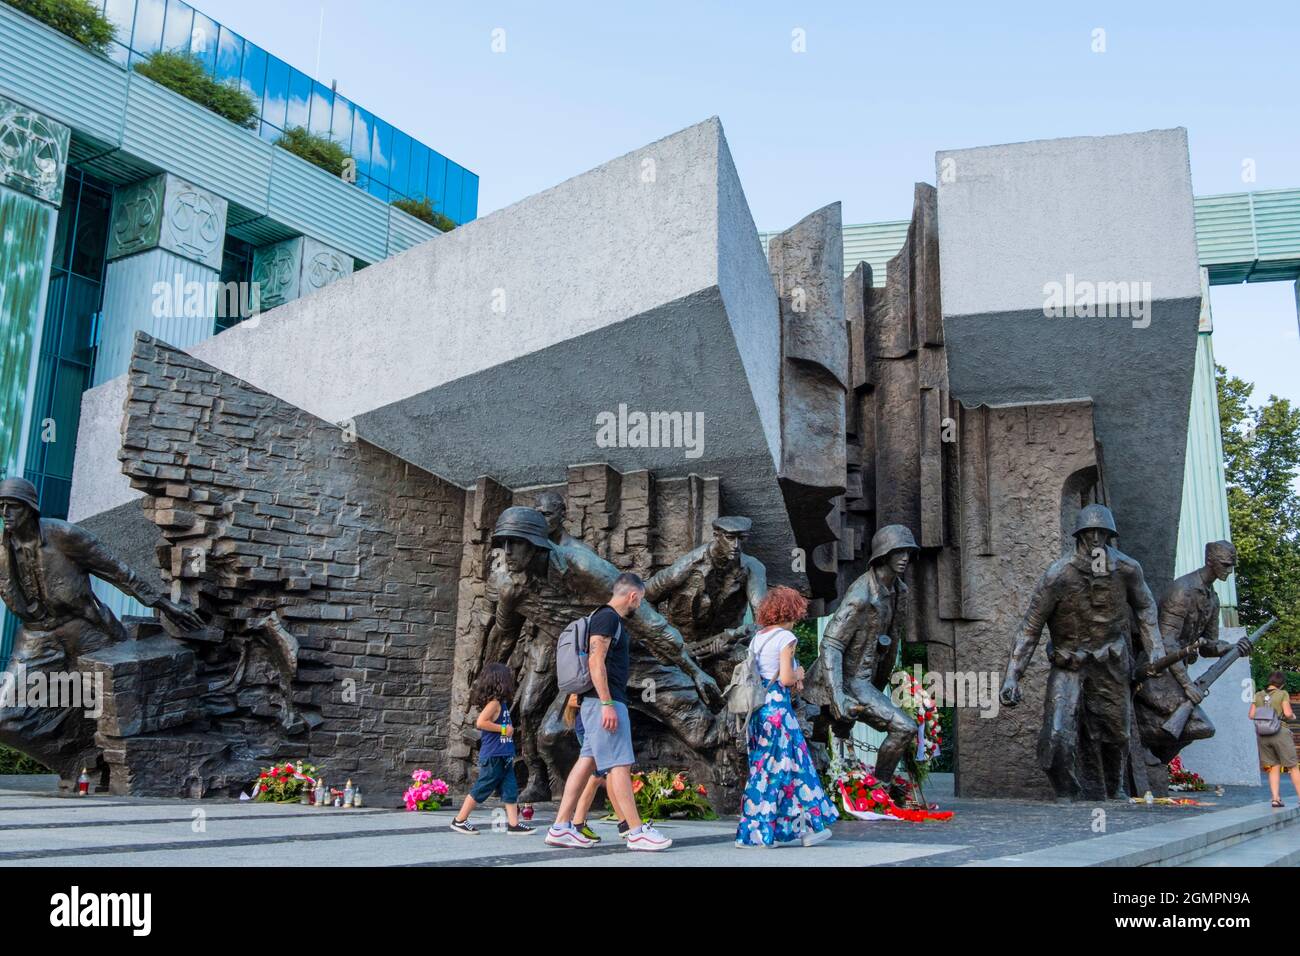 Pomnik Powstania Warszawskiego, Monument de l'insurrection de Varsovie, Plac Krasińskich, Varsovie, Pologne Banque D'Images